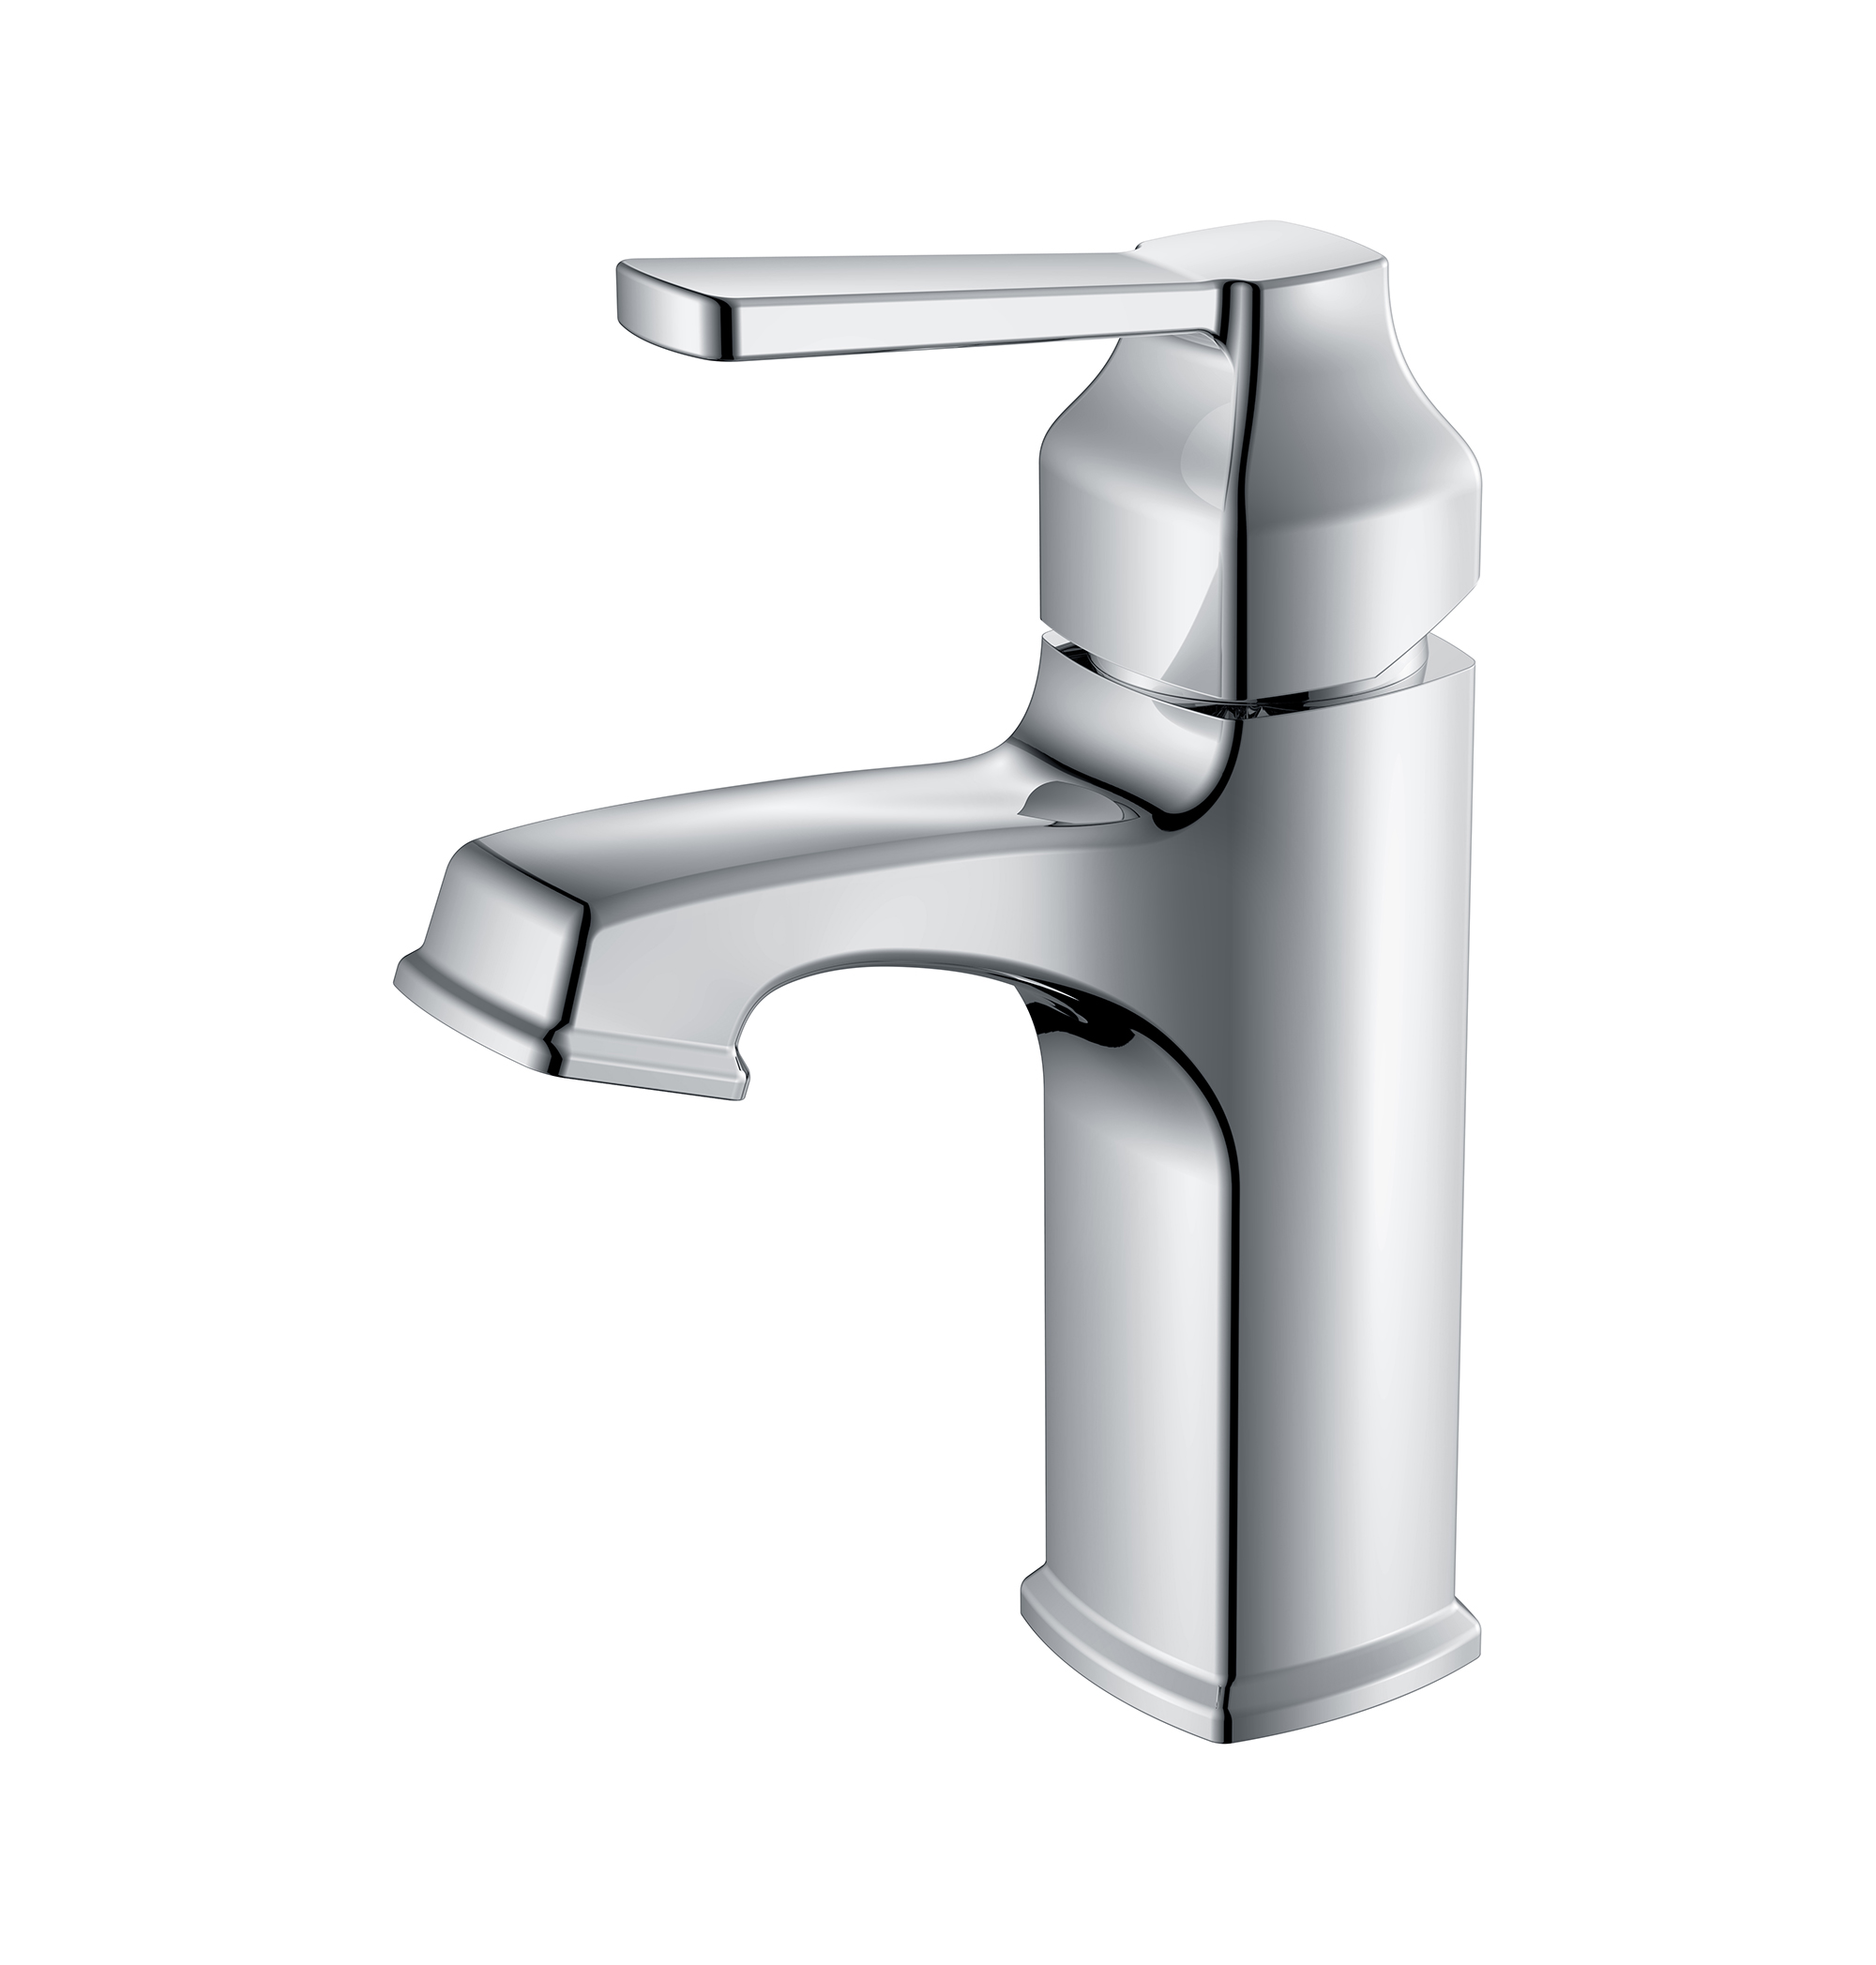 Chrome Classical Square Shape Single Handle Basin Faucet For Bathroom